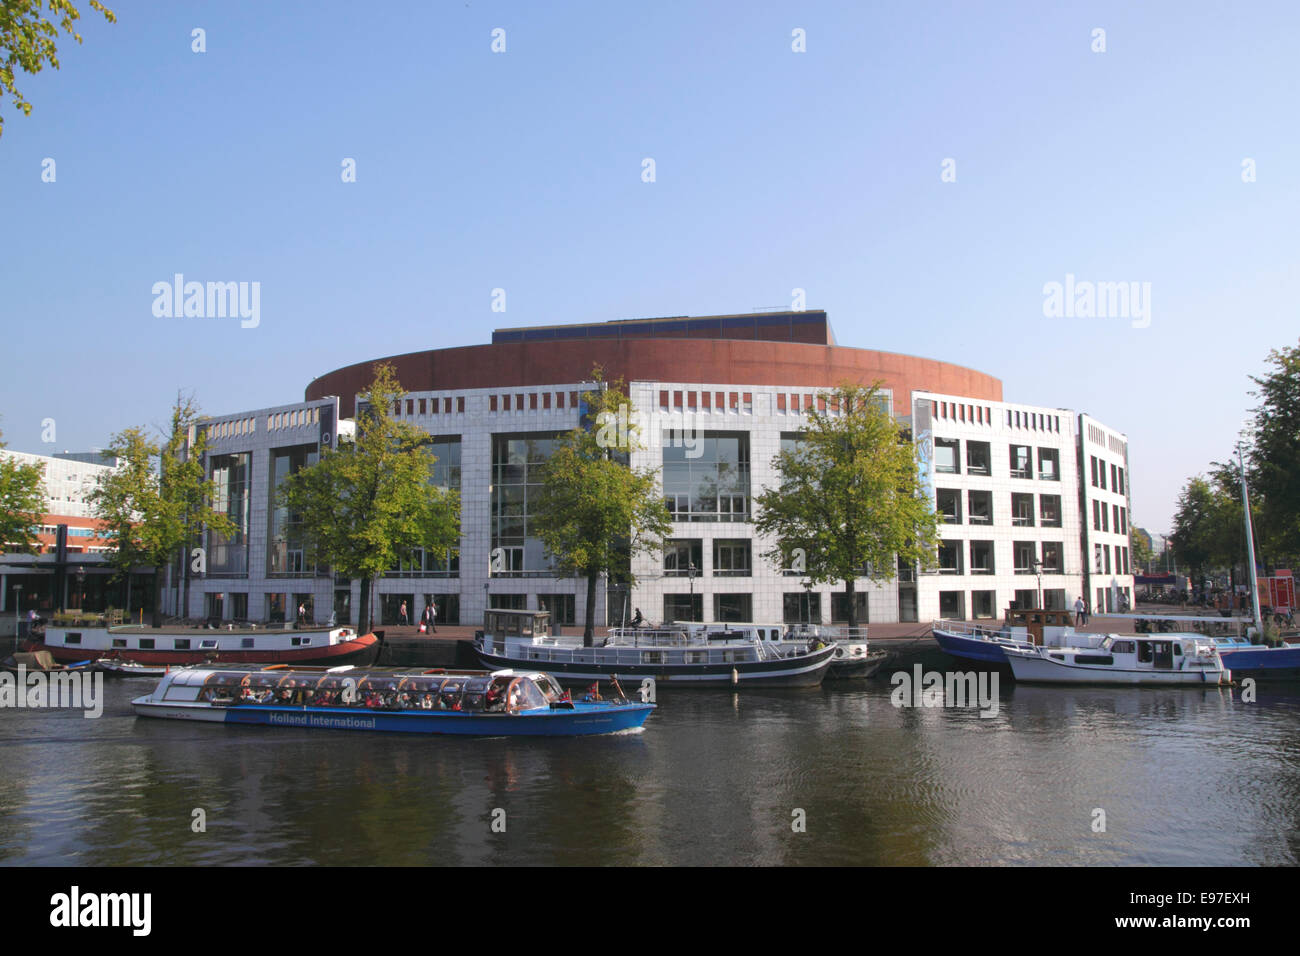 Stadhuis Muziektheatre opera house by Amstel River Amsterdam Stock Photo